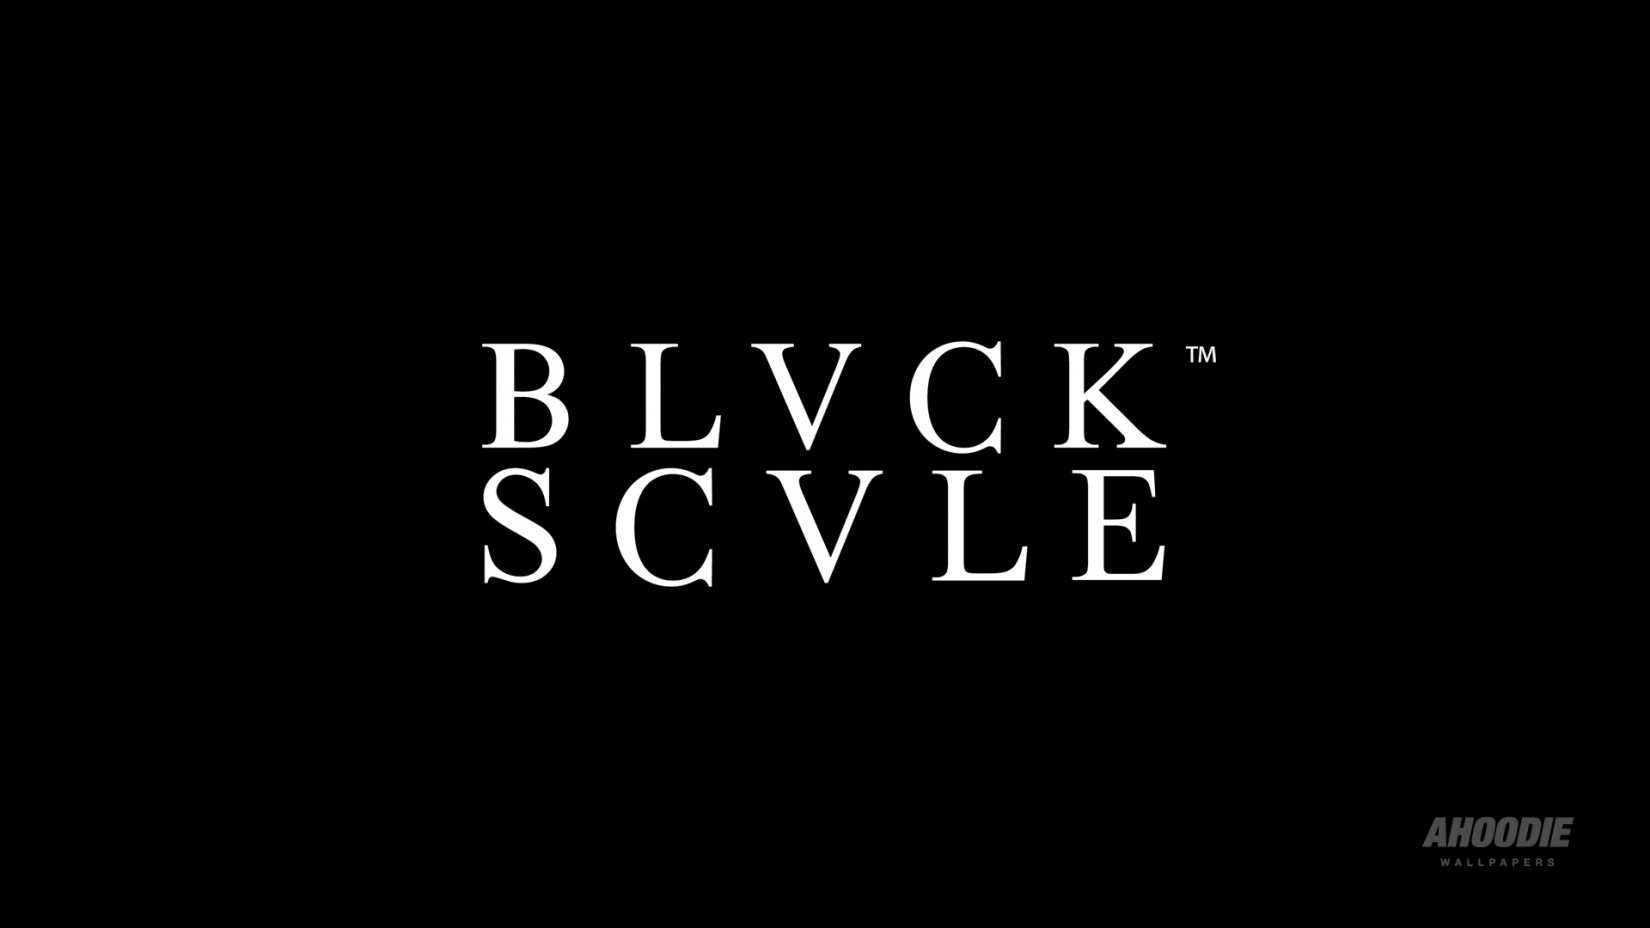 Black Scale . - forum